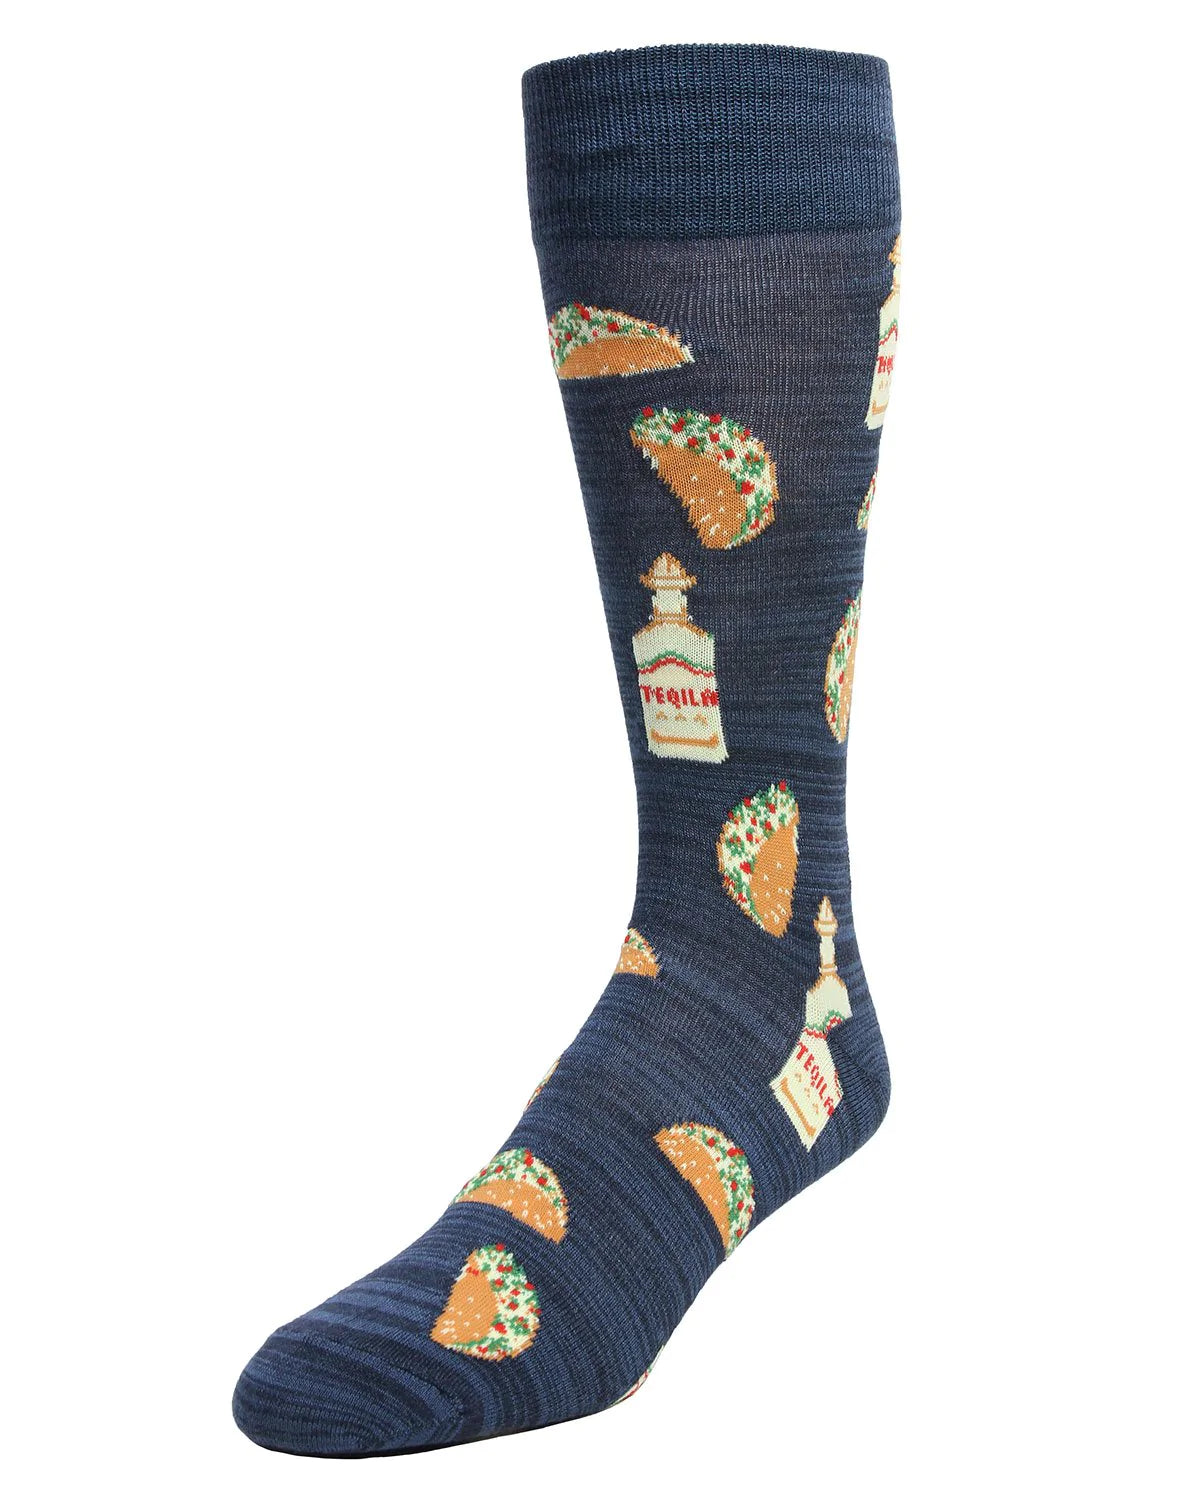 Men's Crew Socks Taco Tuesday